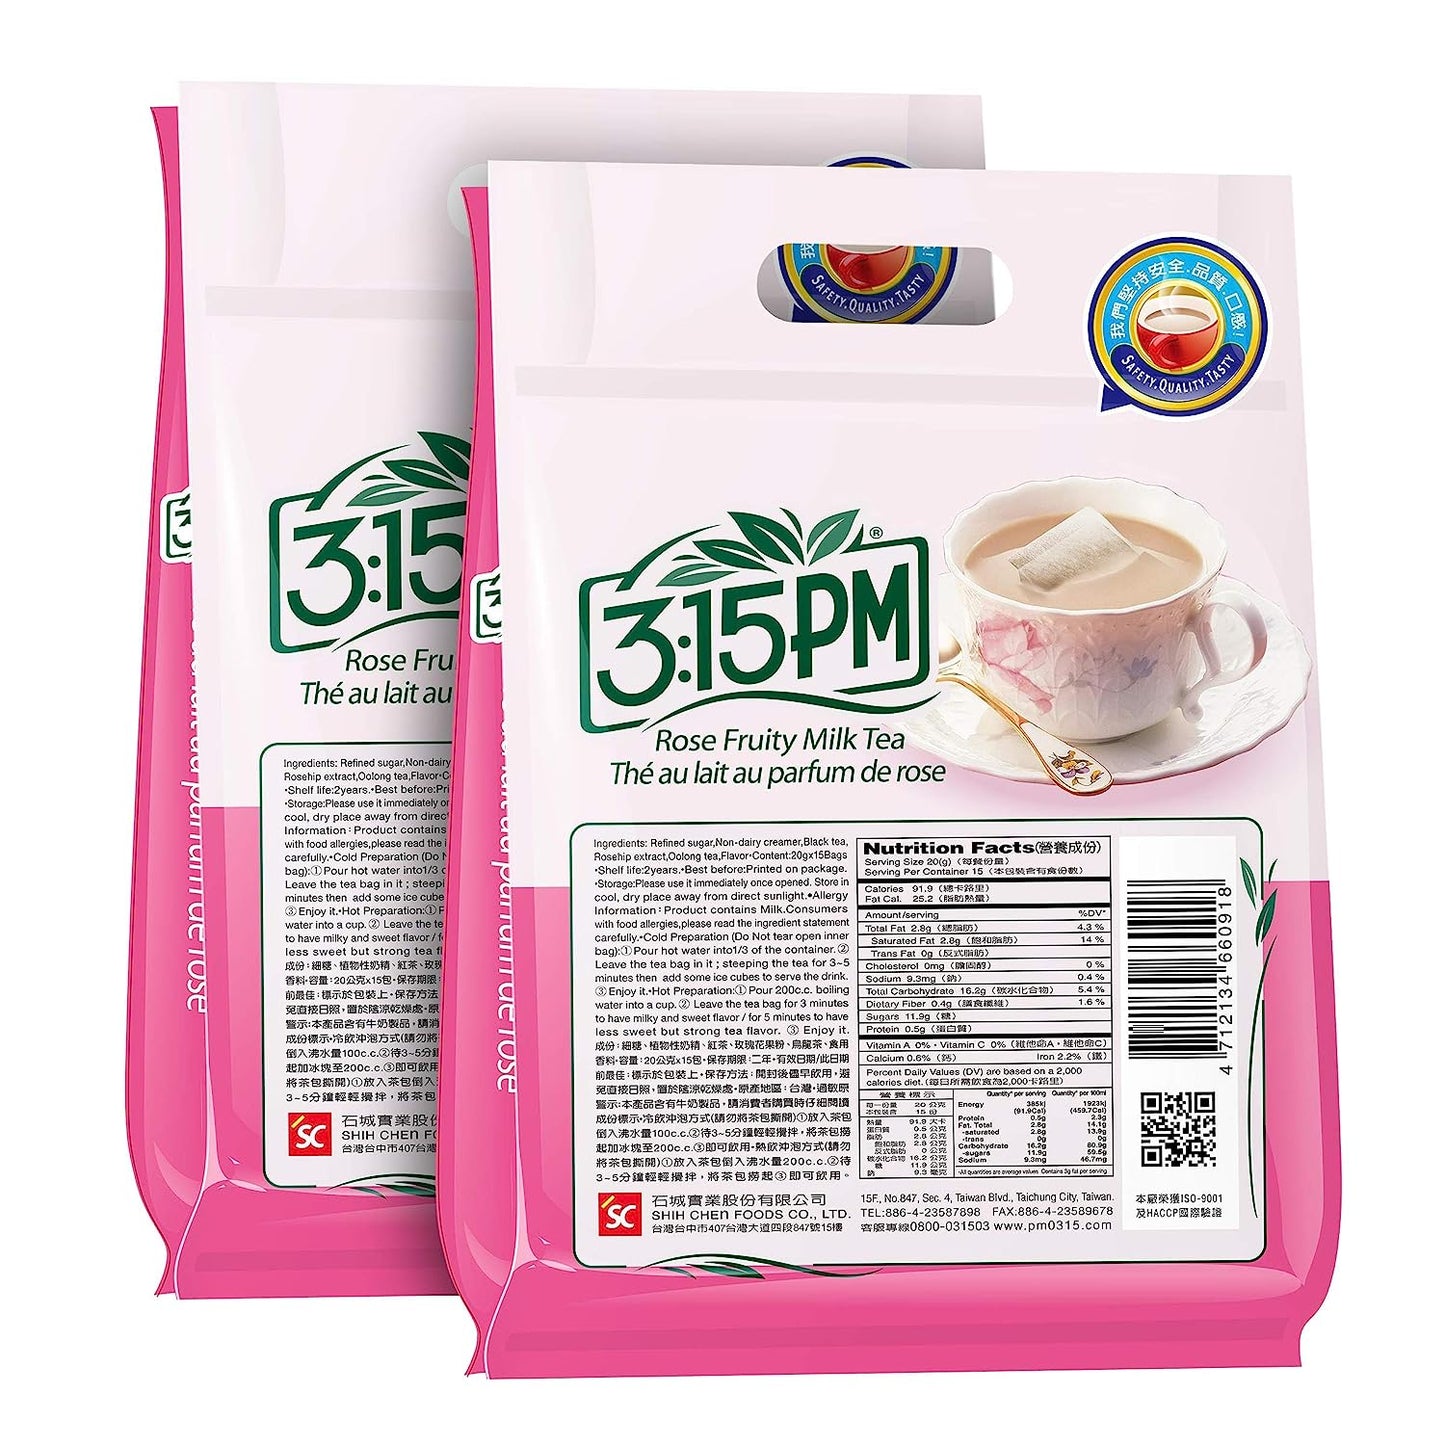 3:15pm Milk Tea - Classic Series - Authentic Bubble Tea (10 teabags) (Rose Fruity Milk Tea, 30)